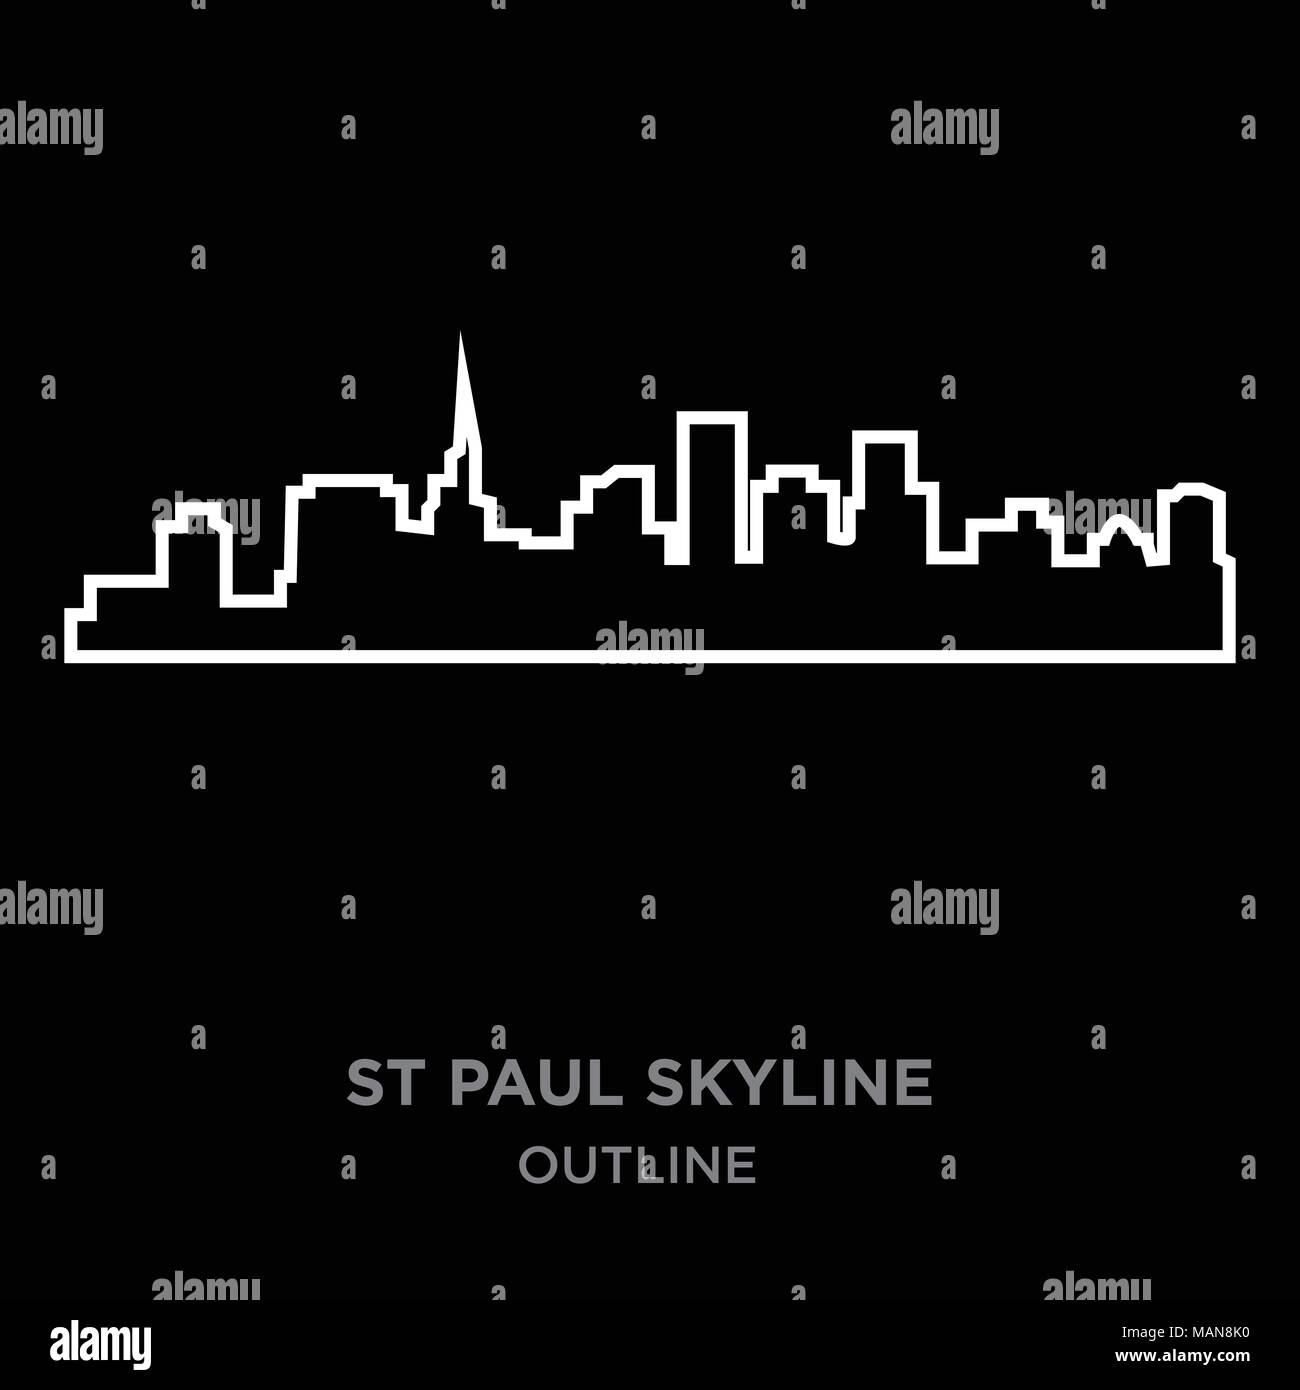 St Paul Artwork Black and White: The St Paul Skyline at Night